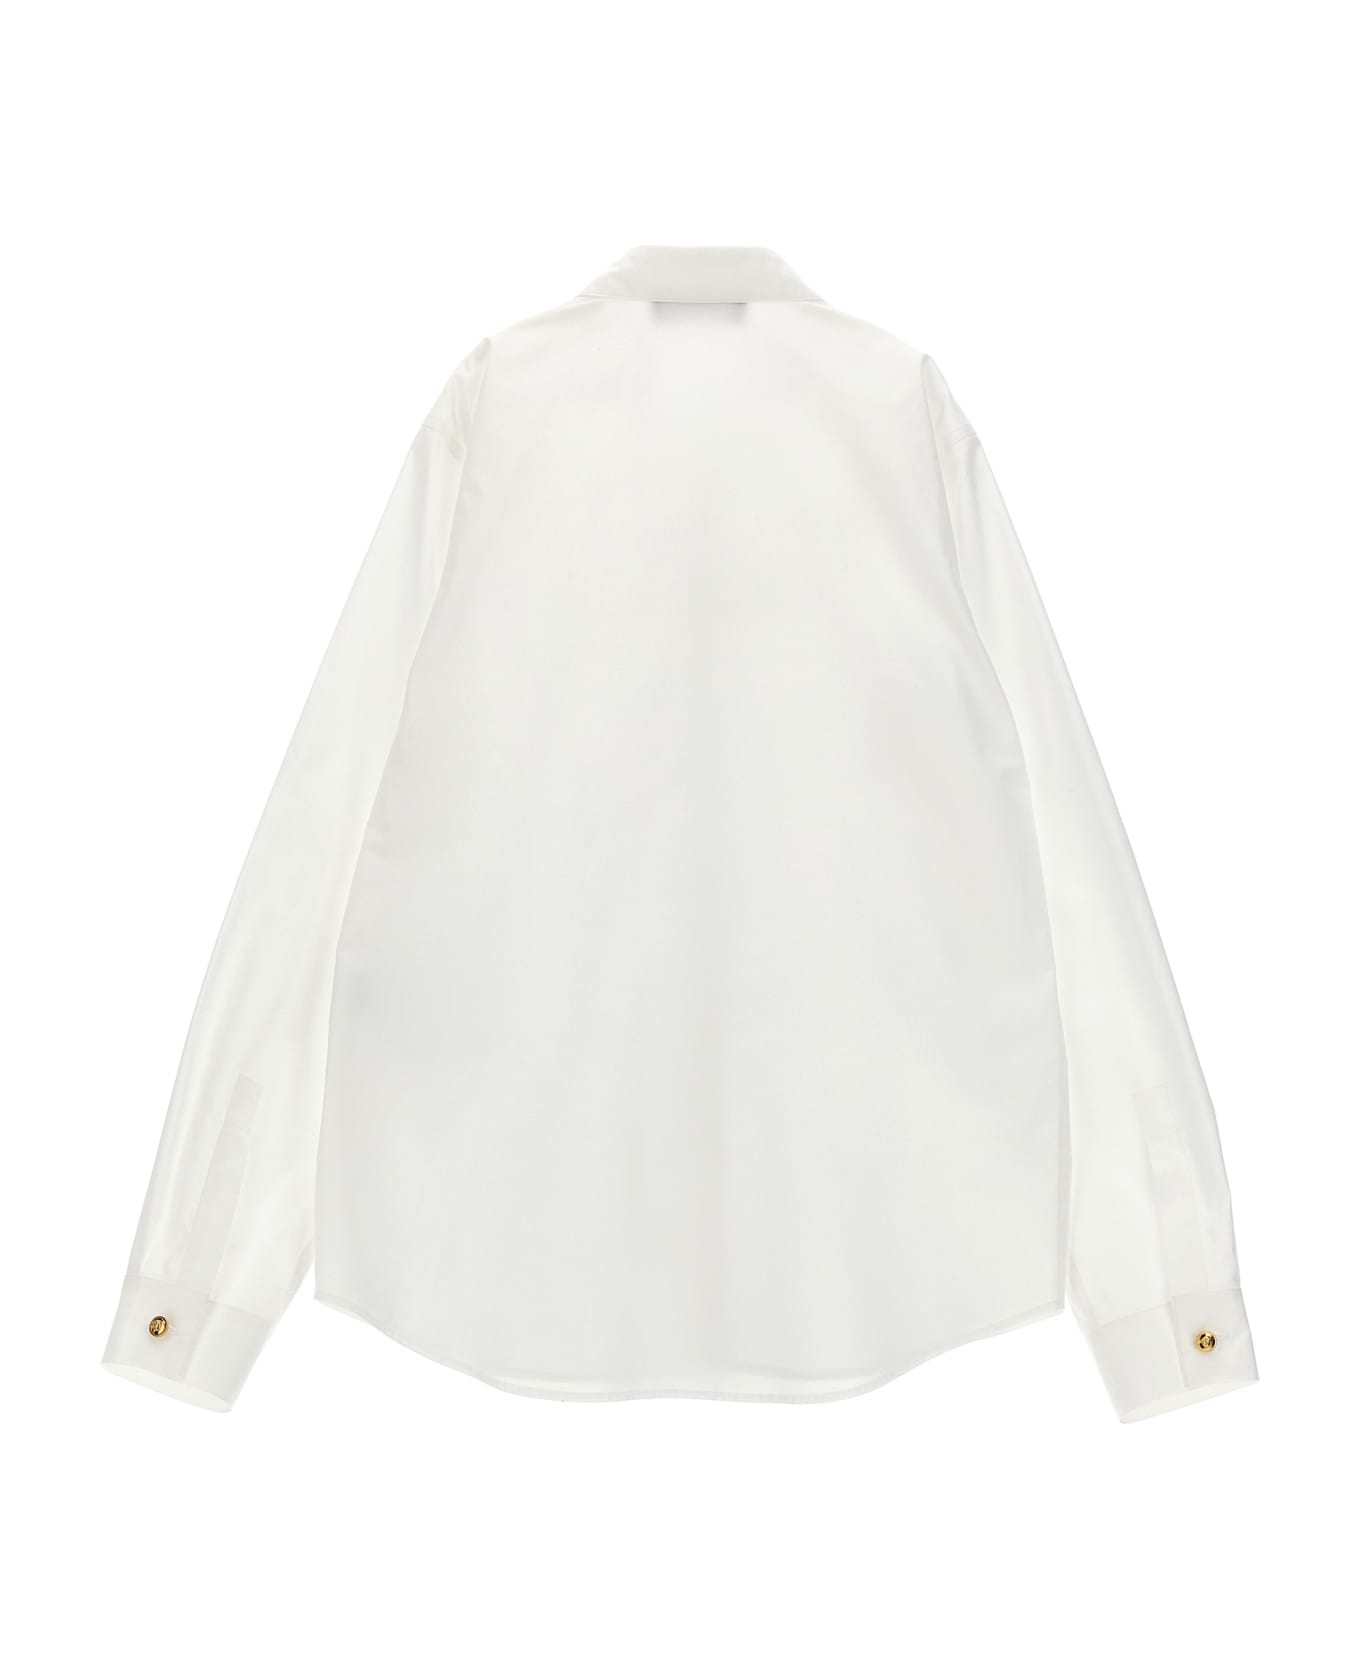 Versace 'medusa' Shirt - White